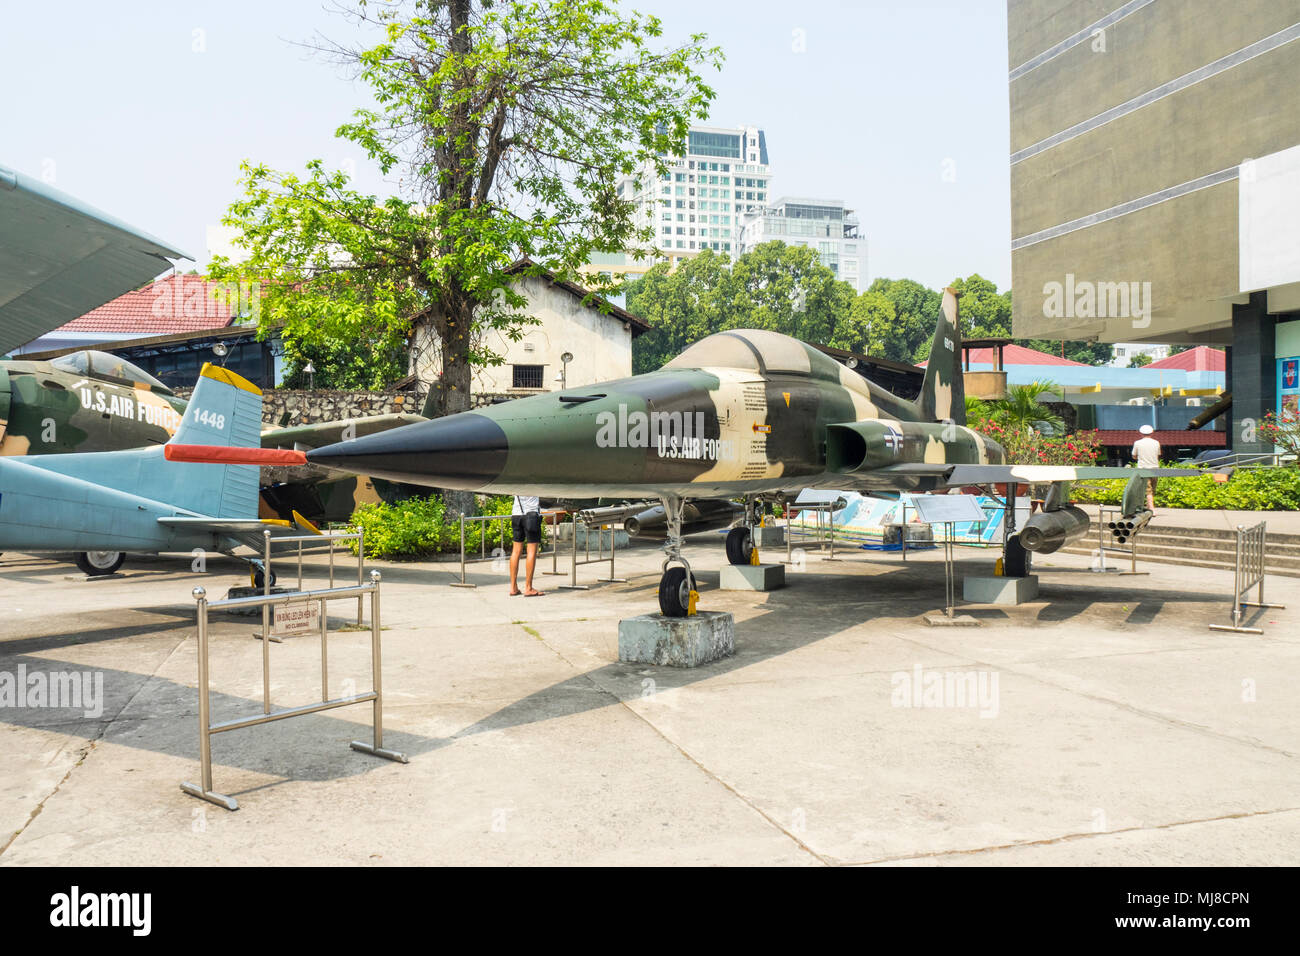 US Air Force Northrop F-5A Jagdflugzeug aus dem Vietnamkrieg auf Anzeige an das War Remnants Museum, Ho Chi Minh City, Vietnam. Stockfoto